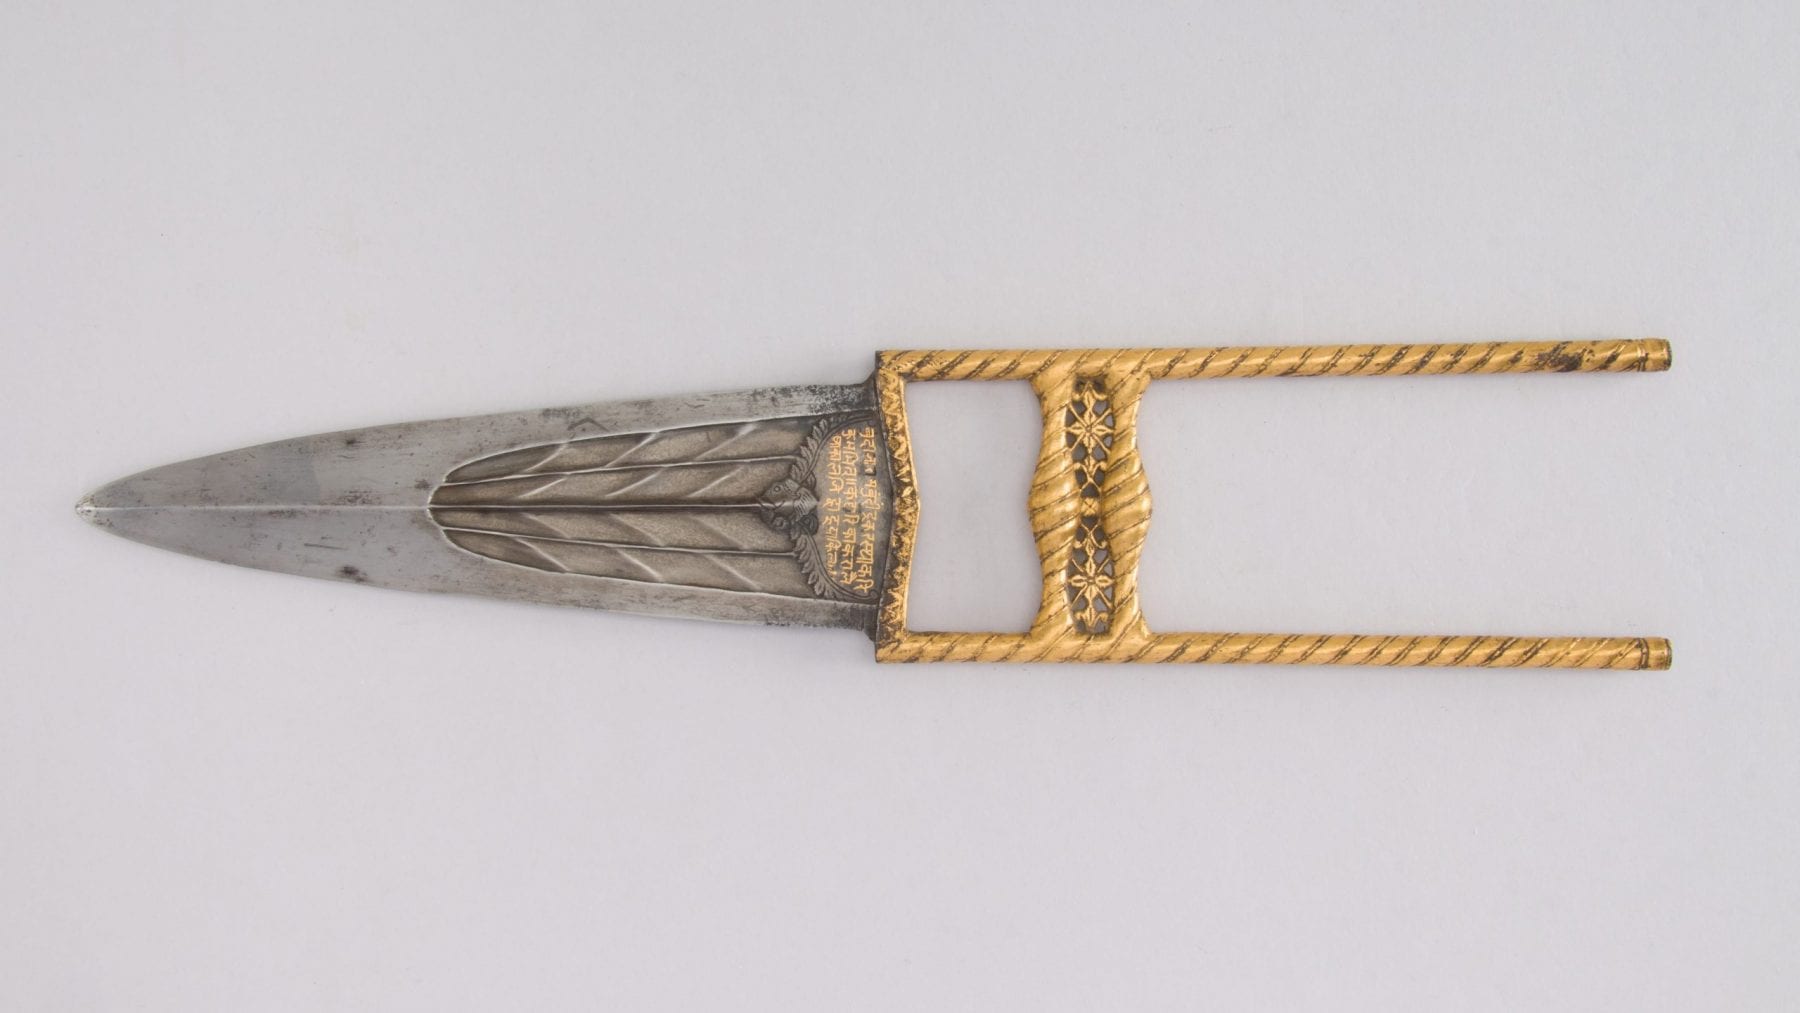 The Indian Katar dagger.